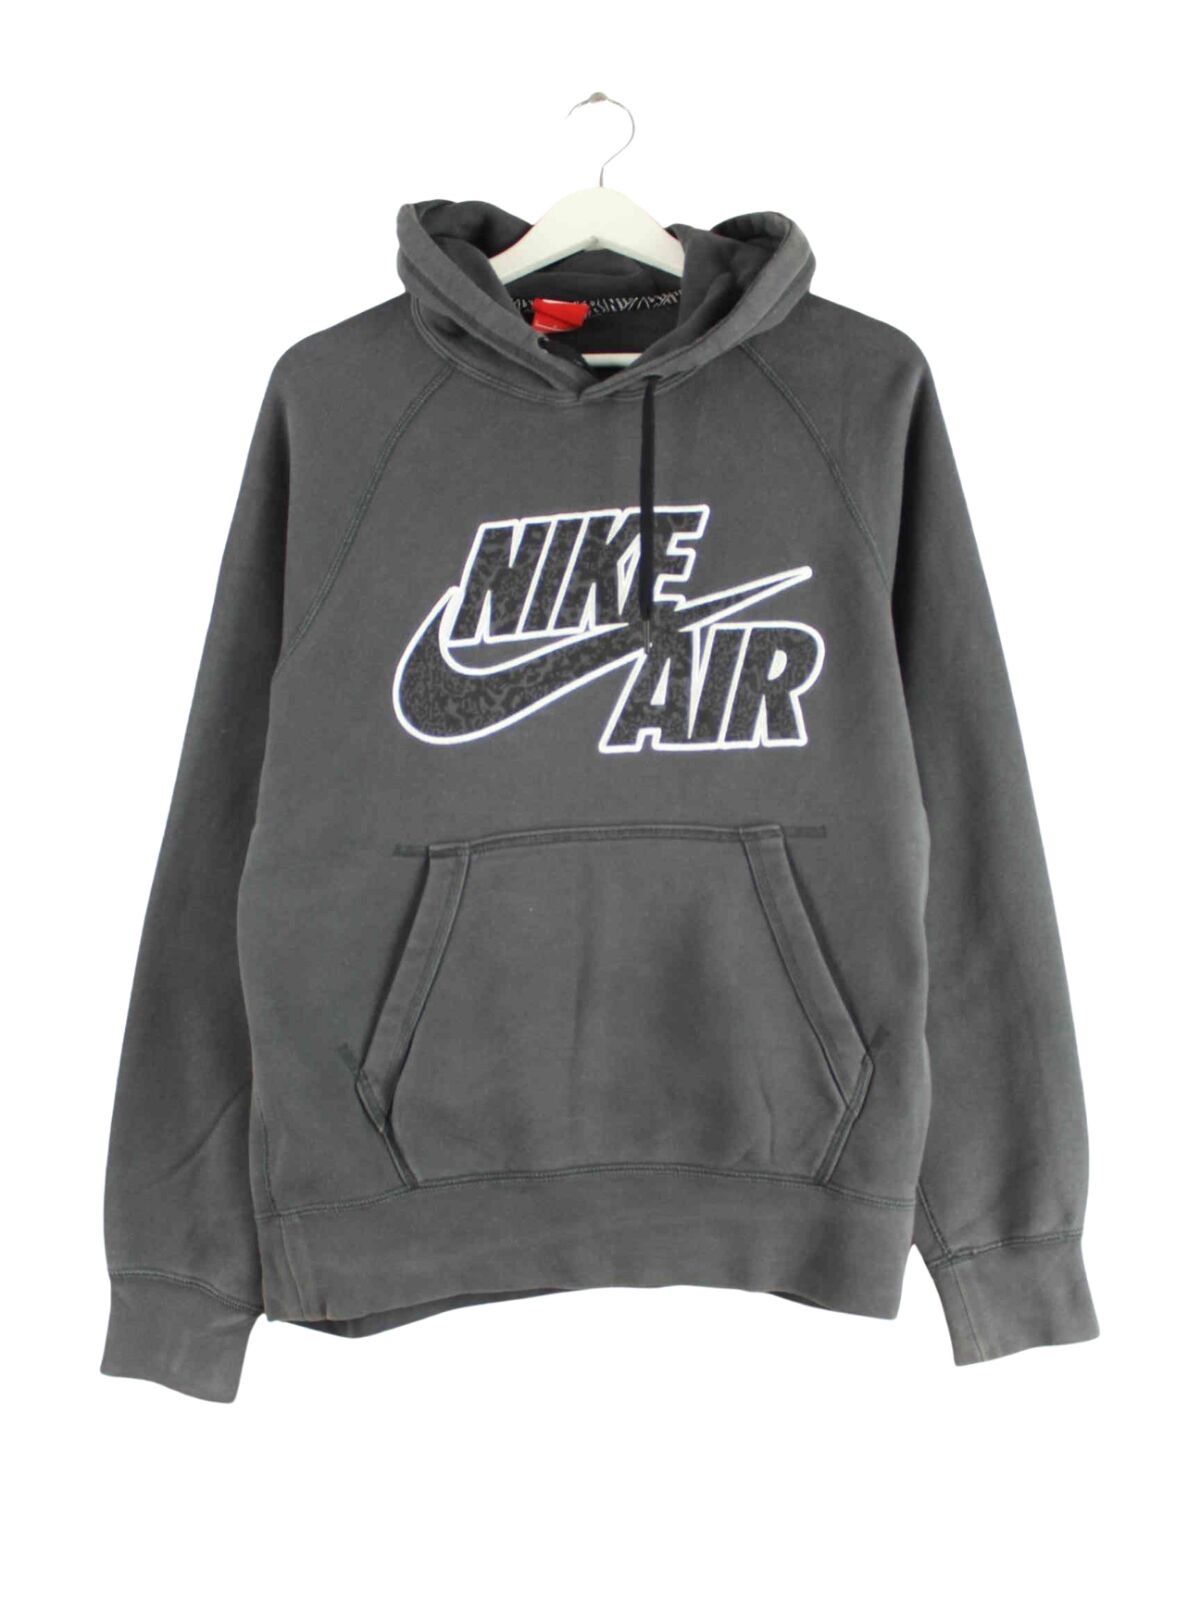 Nike Air Big Logo Embroidered Hoodie Grau S (front image)